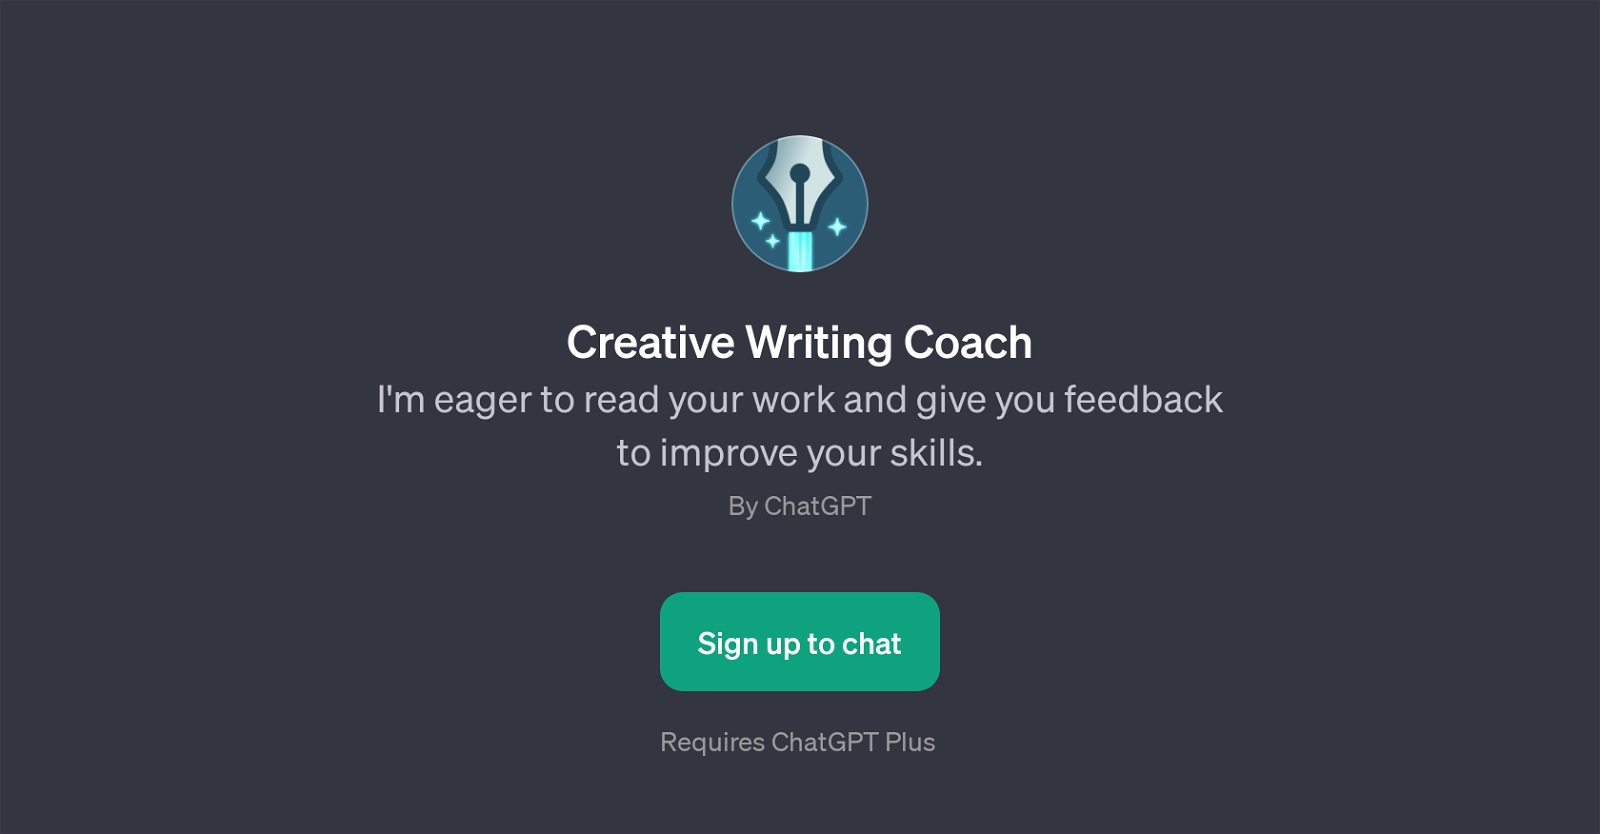 Creative Writing Coach website